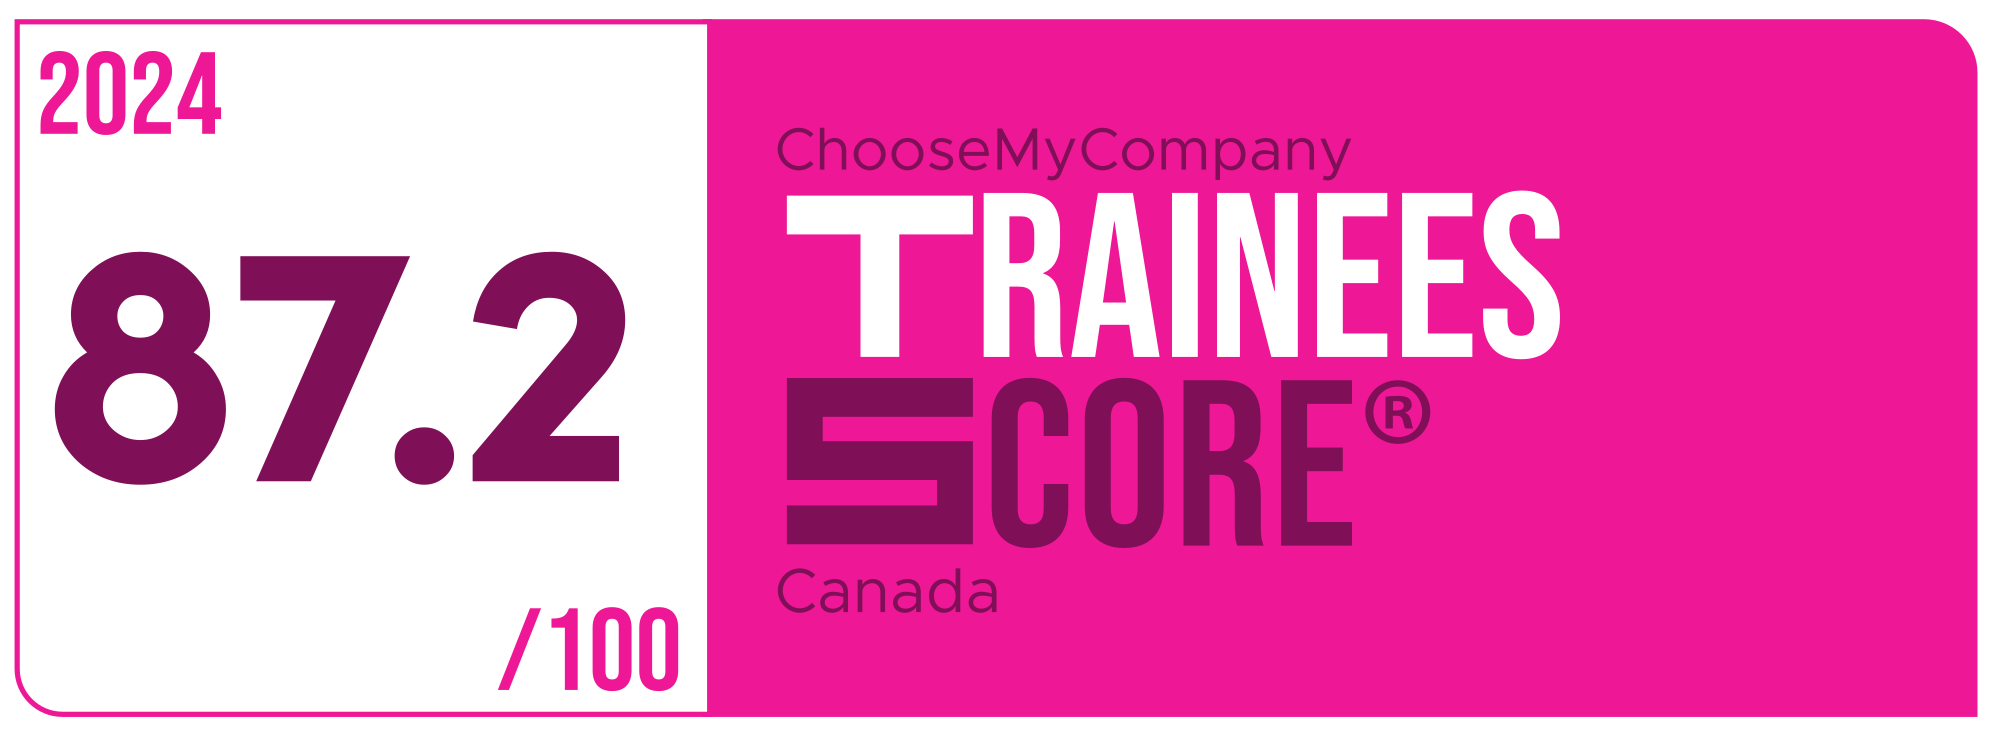 Label Trainees Score 2023-2024 Canada